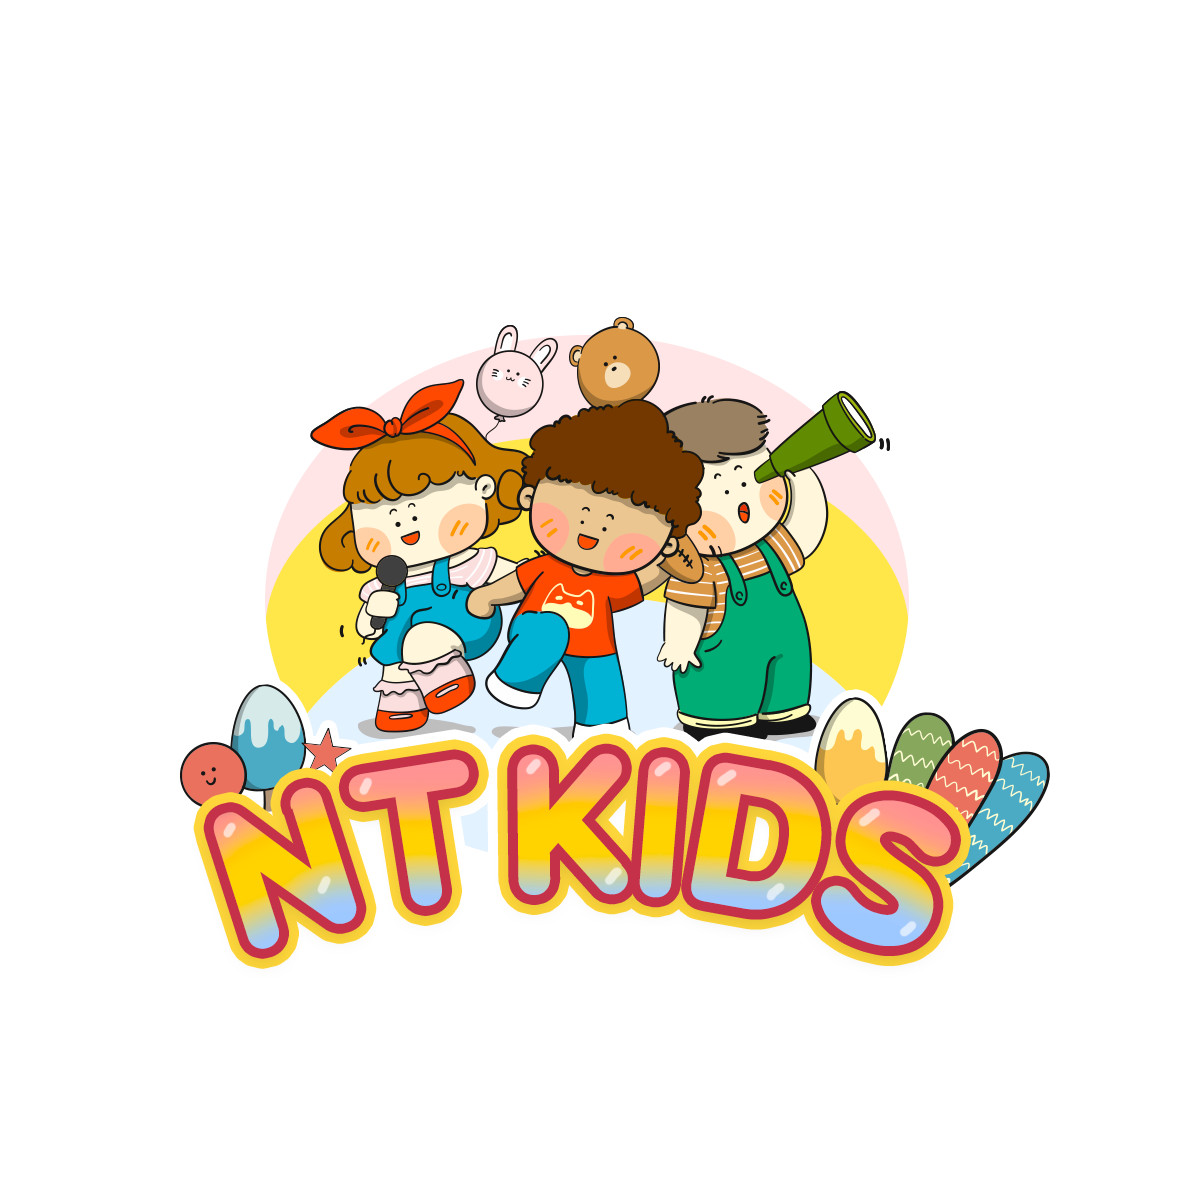 NT Kids